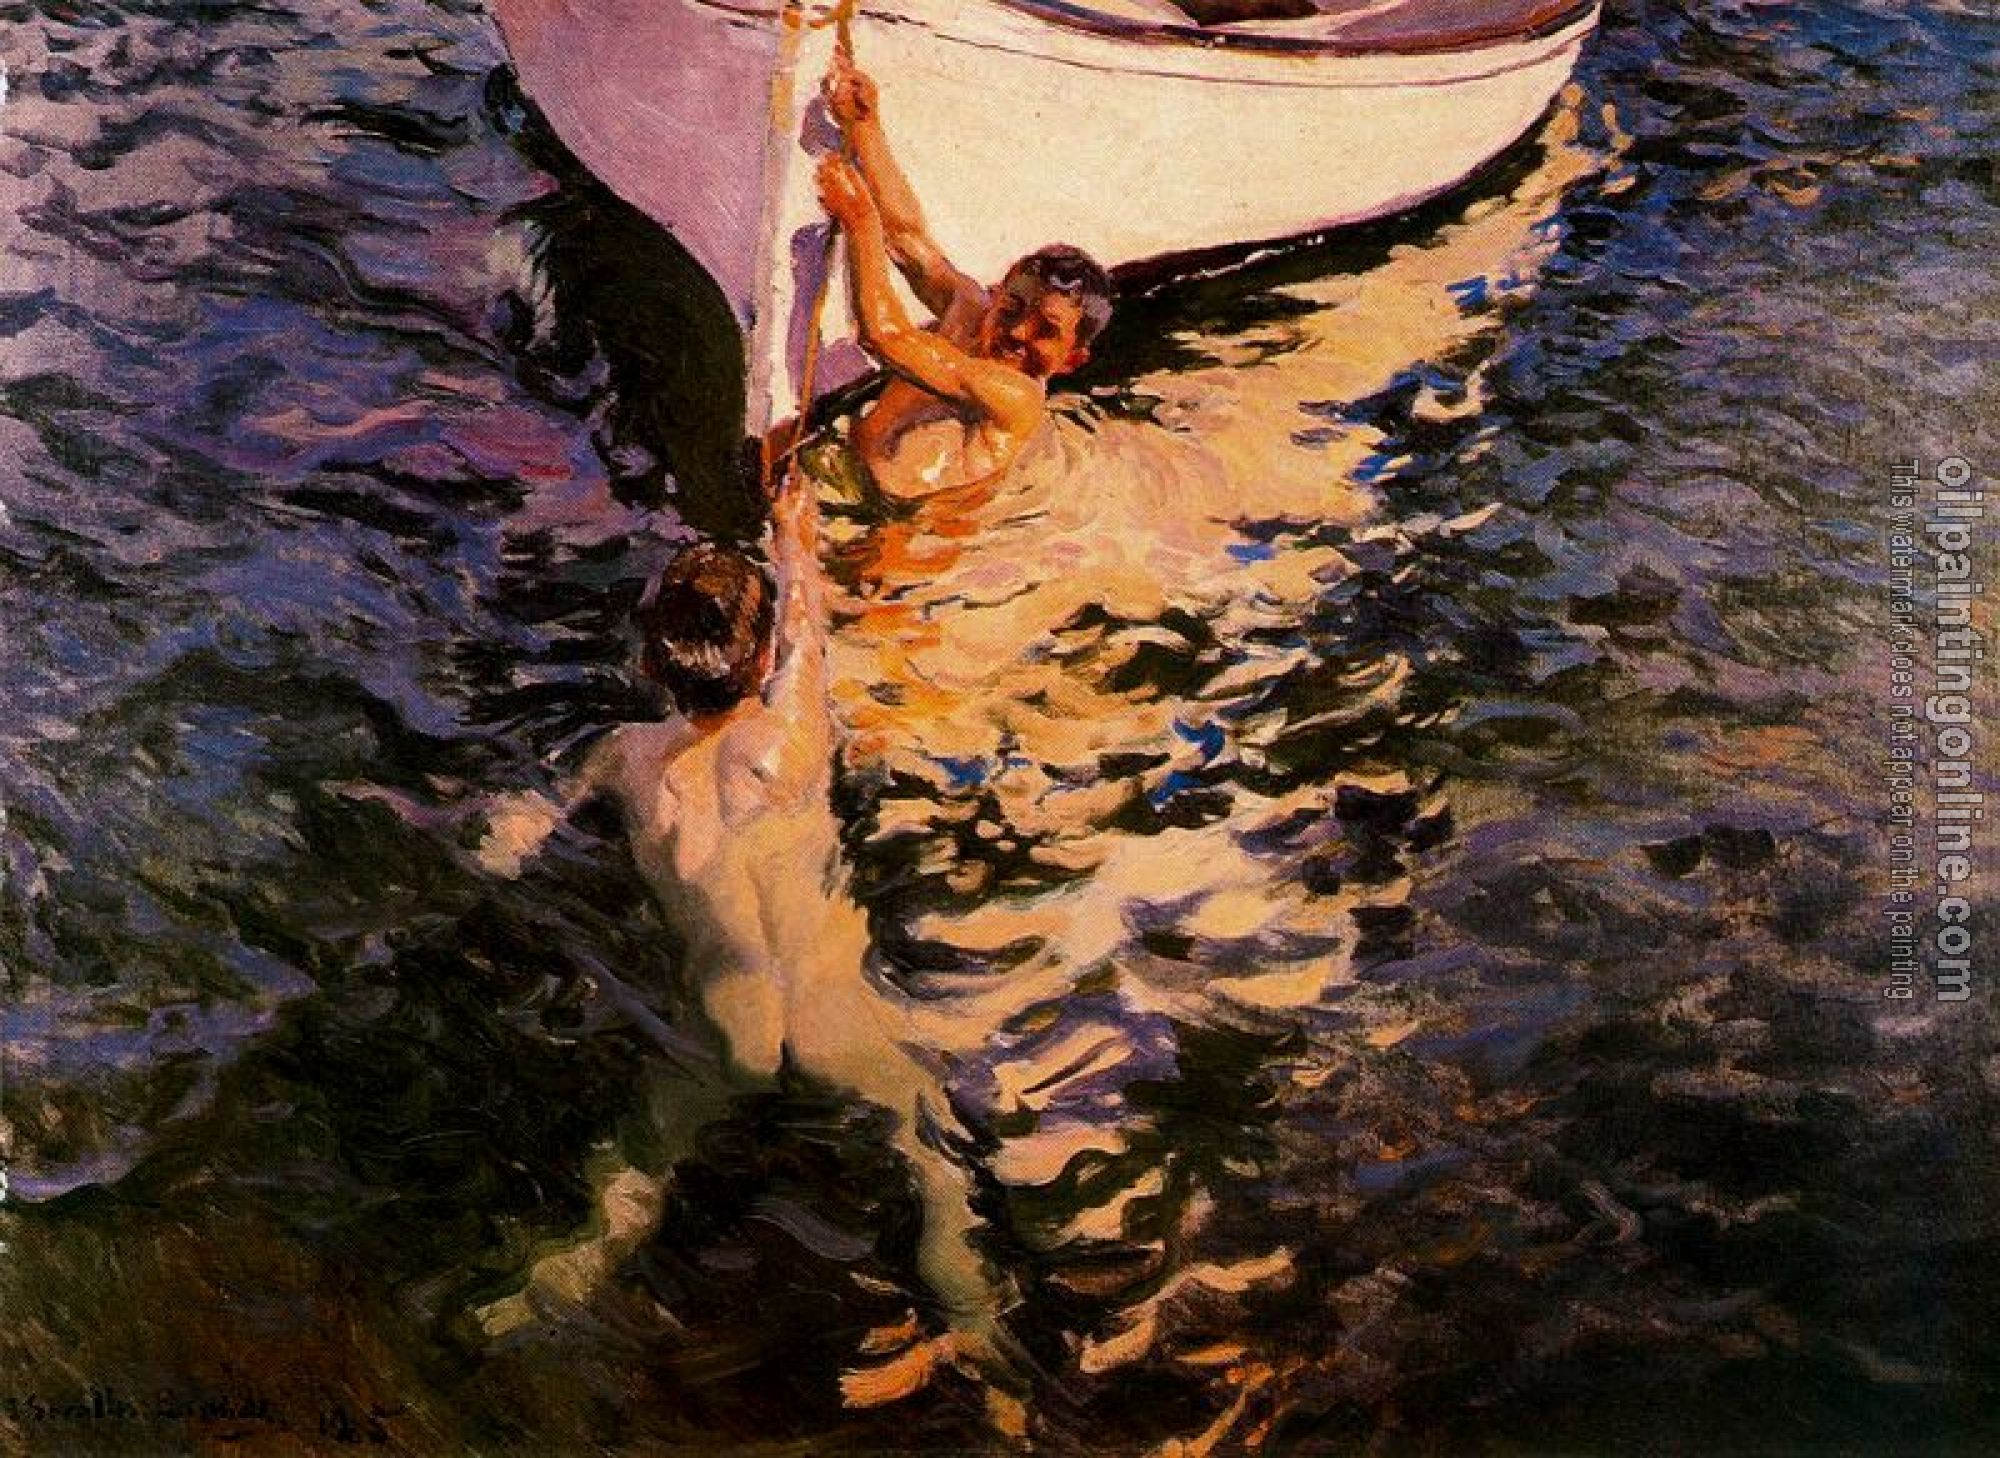 Joaquin Sorolla y Bastida - El bote blanco (The White Boat)